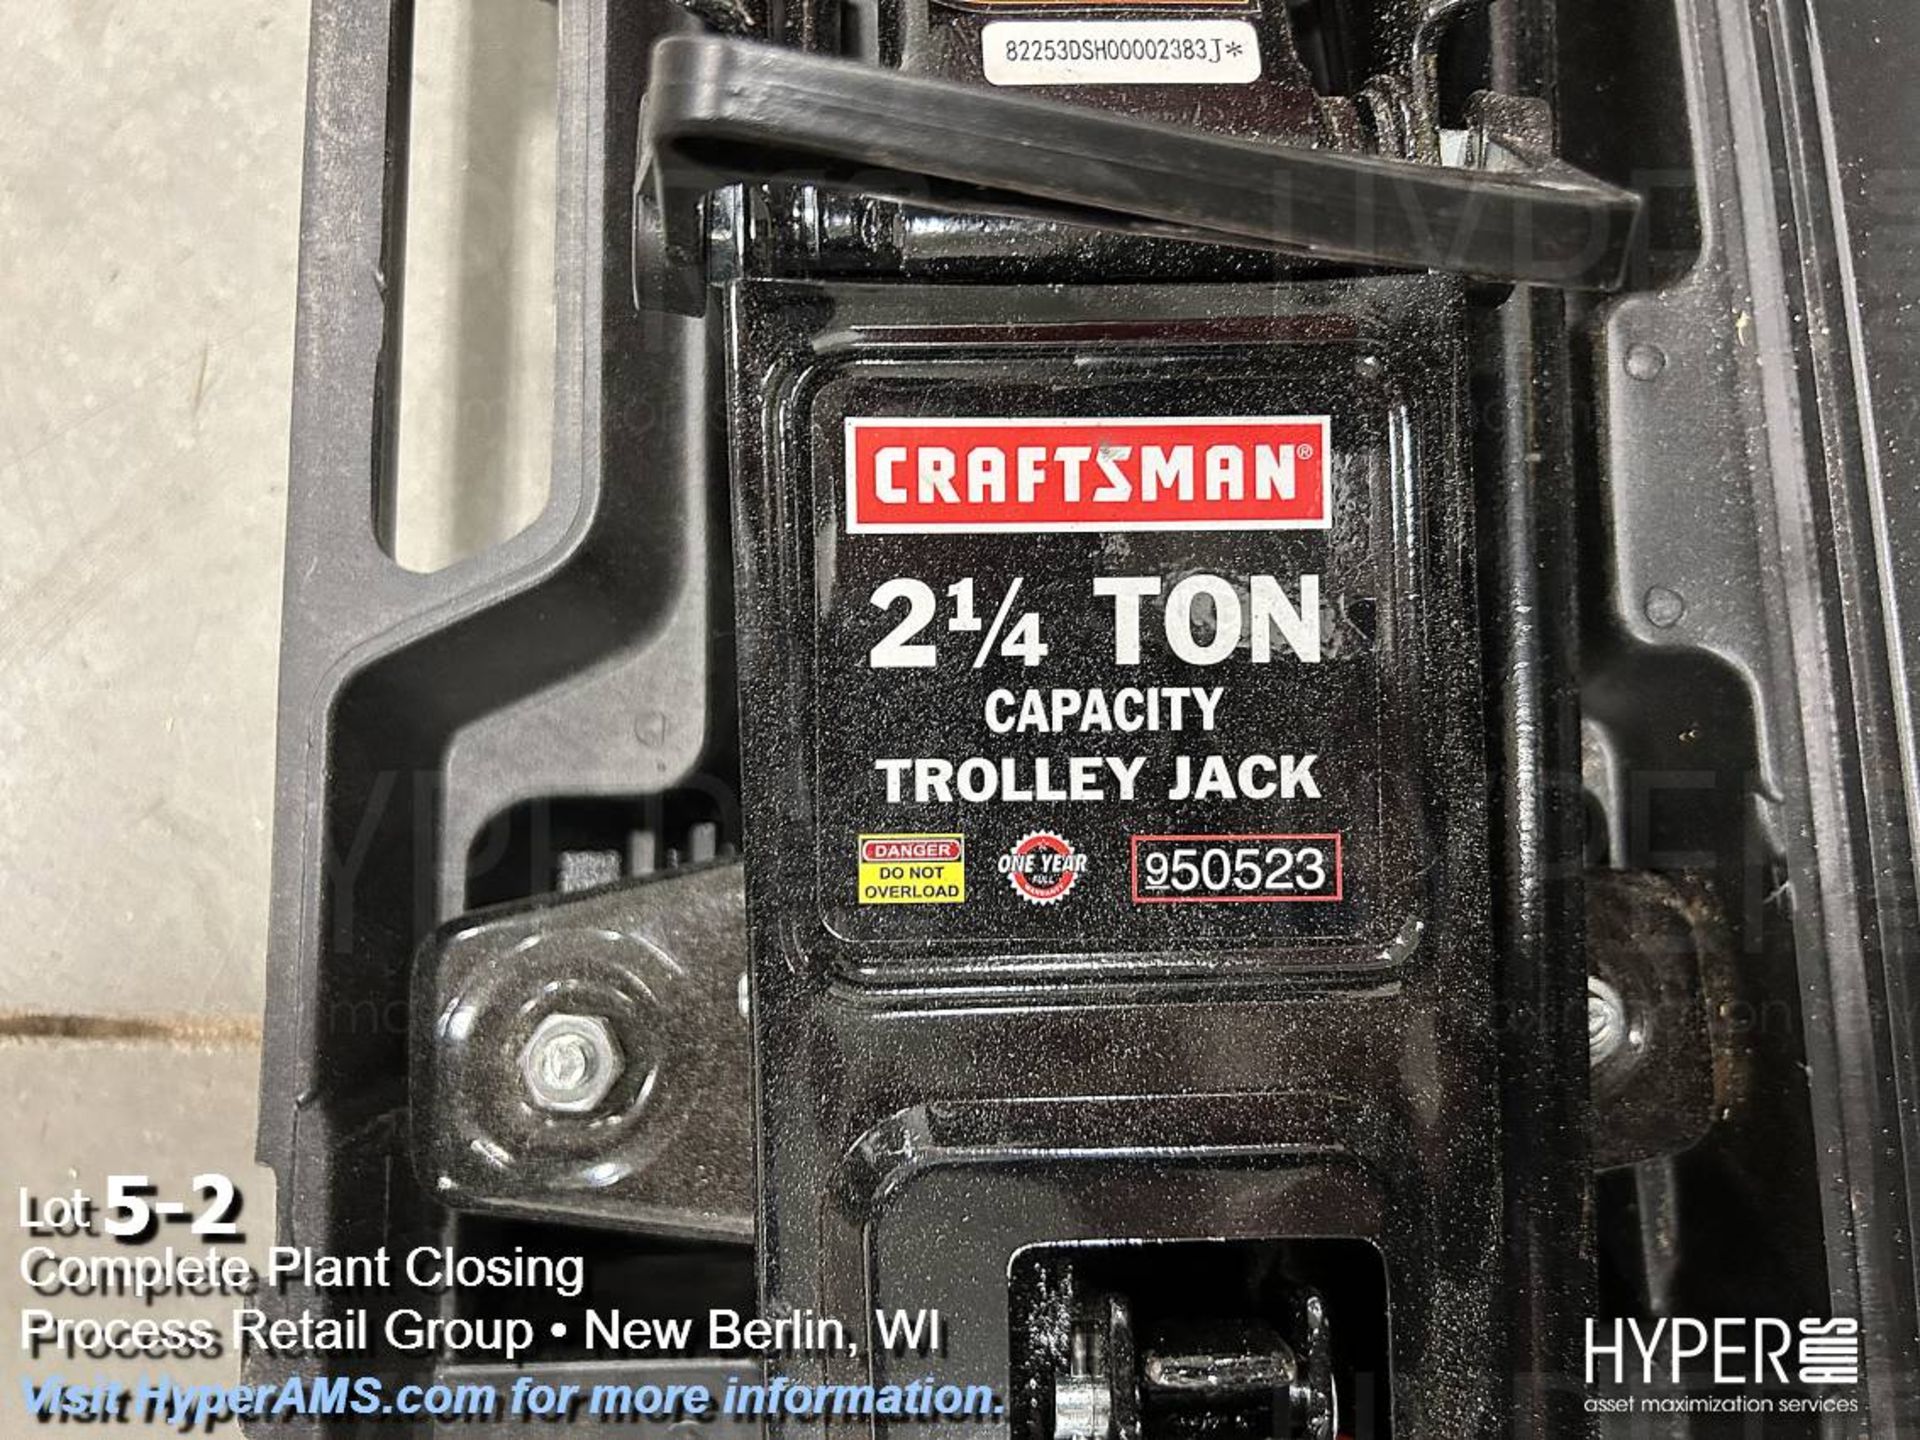 Craftsman 2 1/4 ton capacity trolley jack - Image 2 of 2